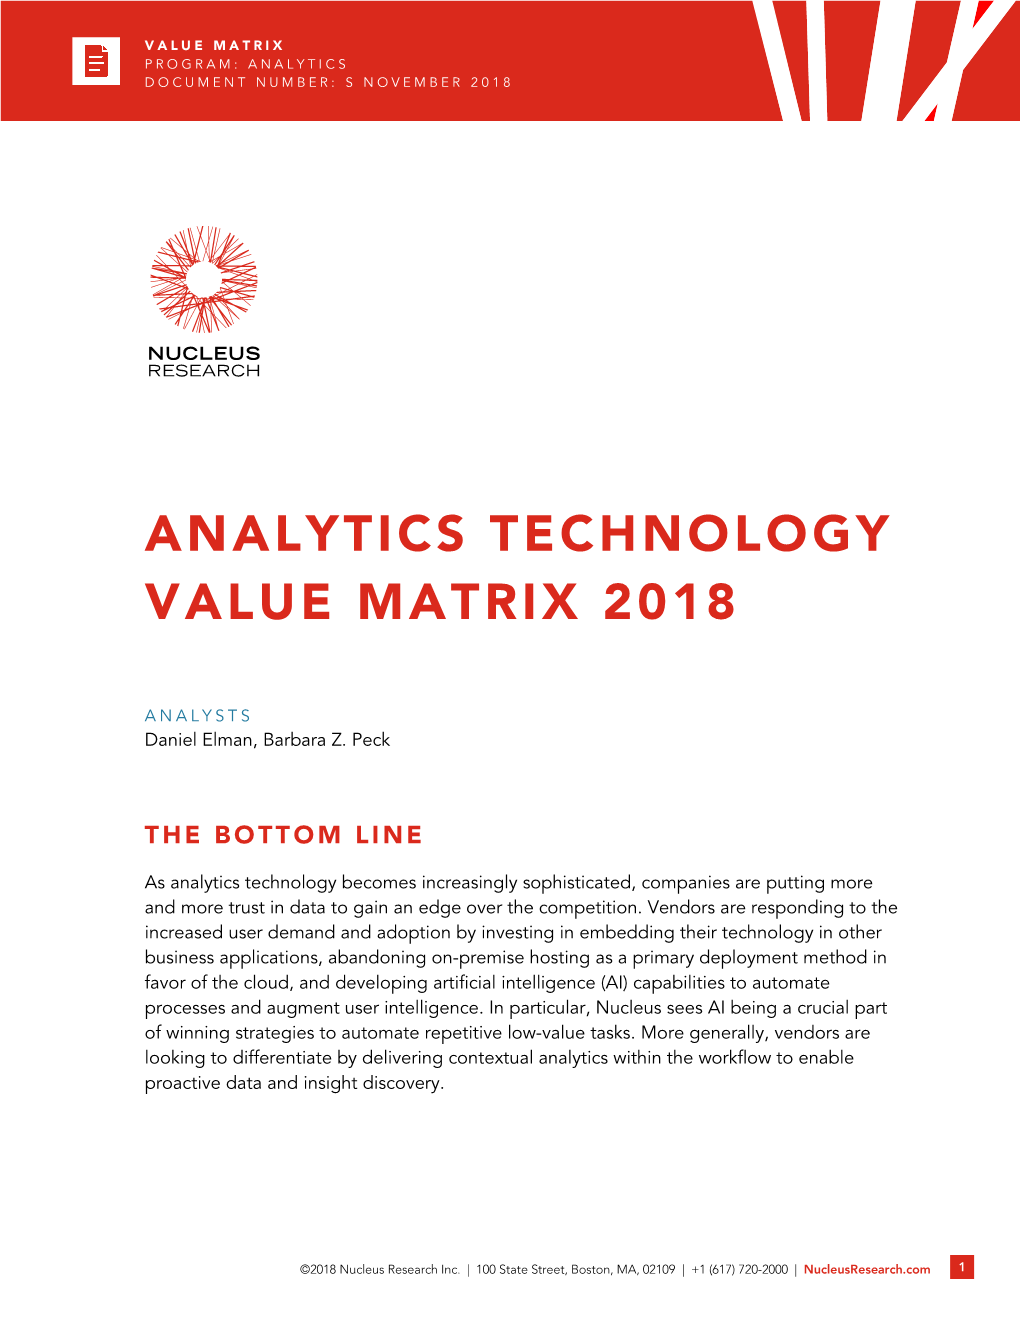 Analytics Technology Value Matrix 2018